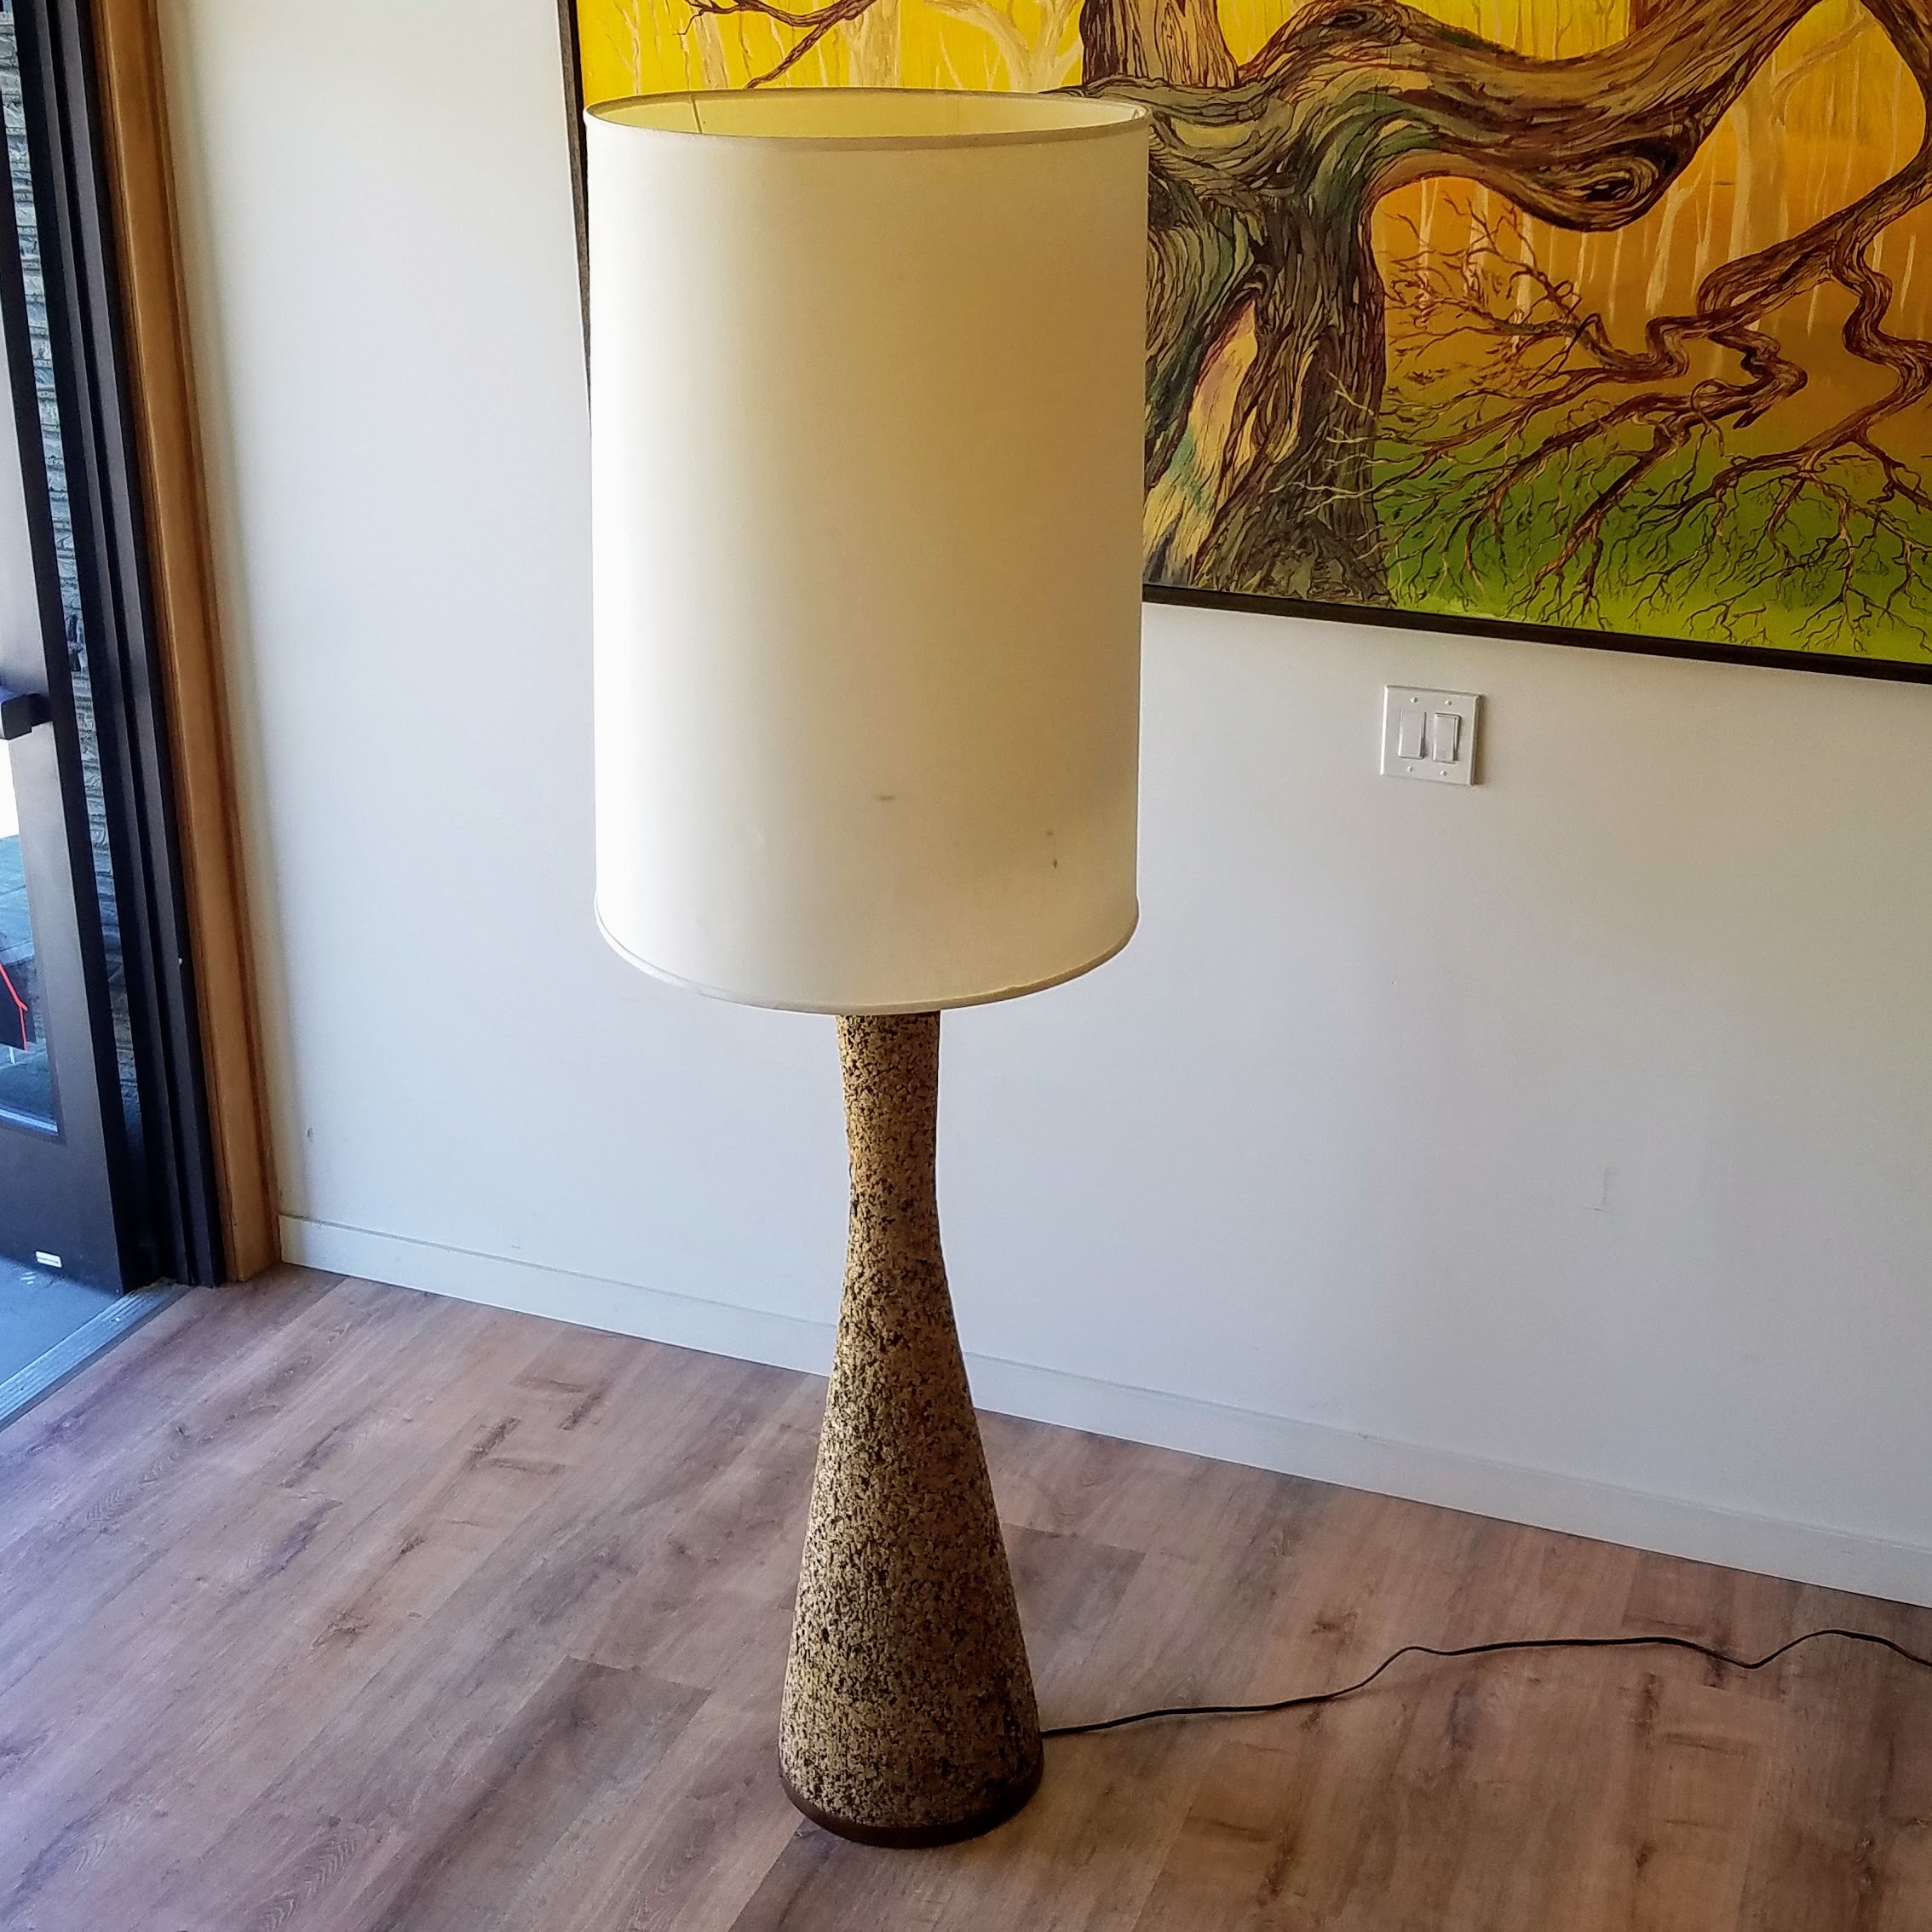 Miller Lamp Co. Floor Lamp